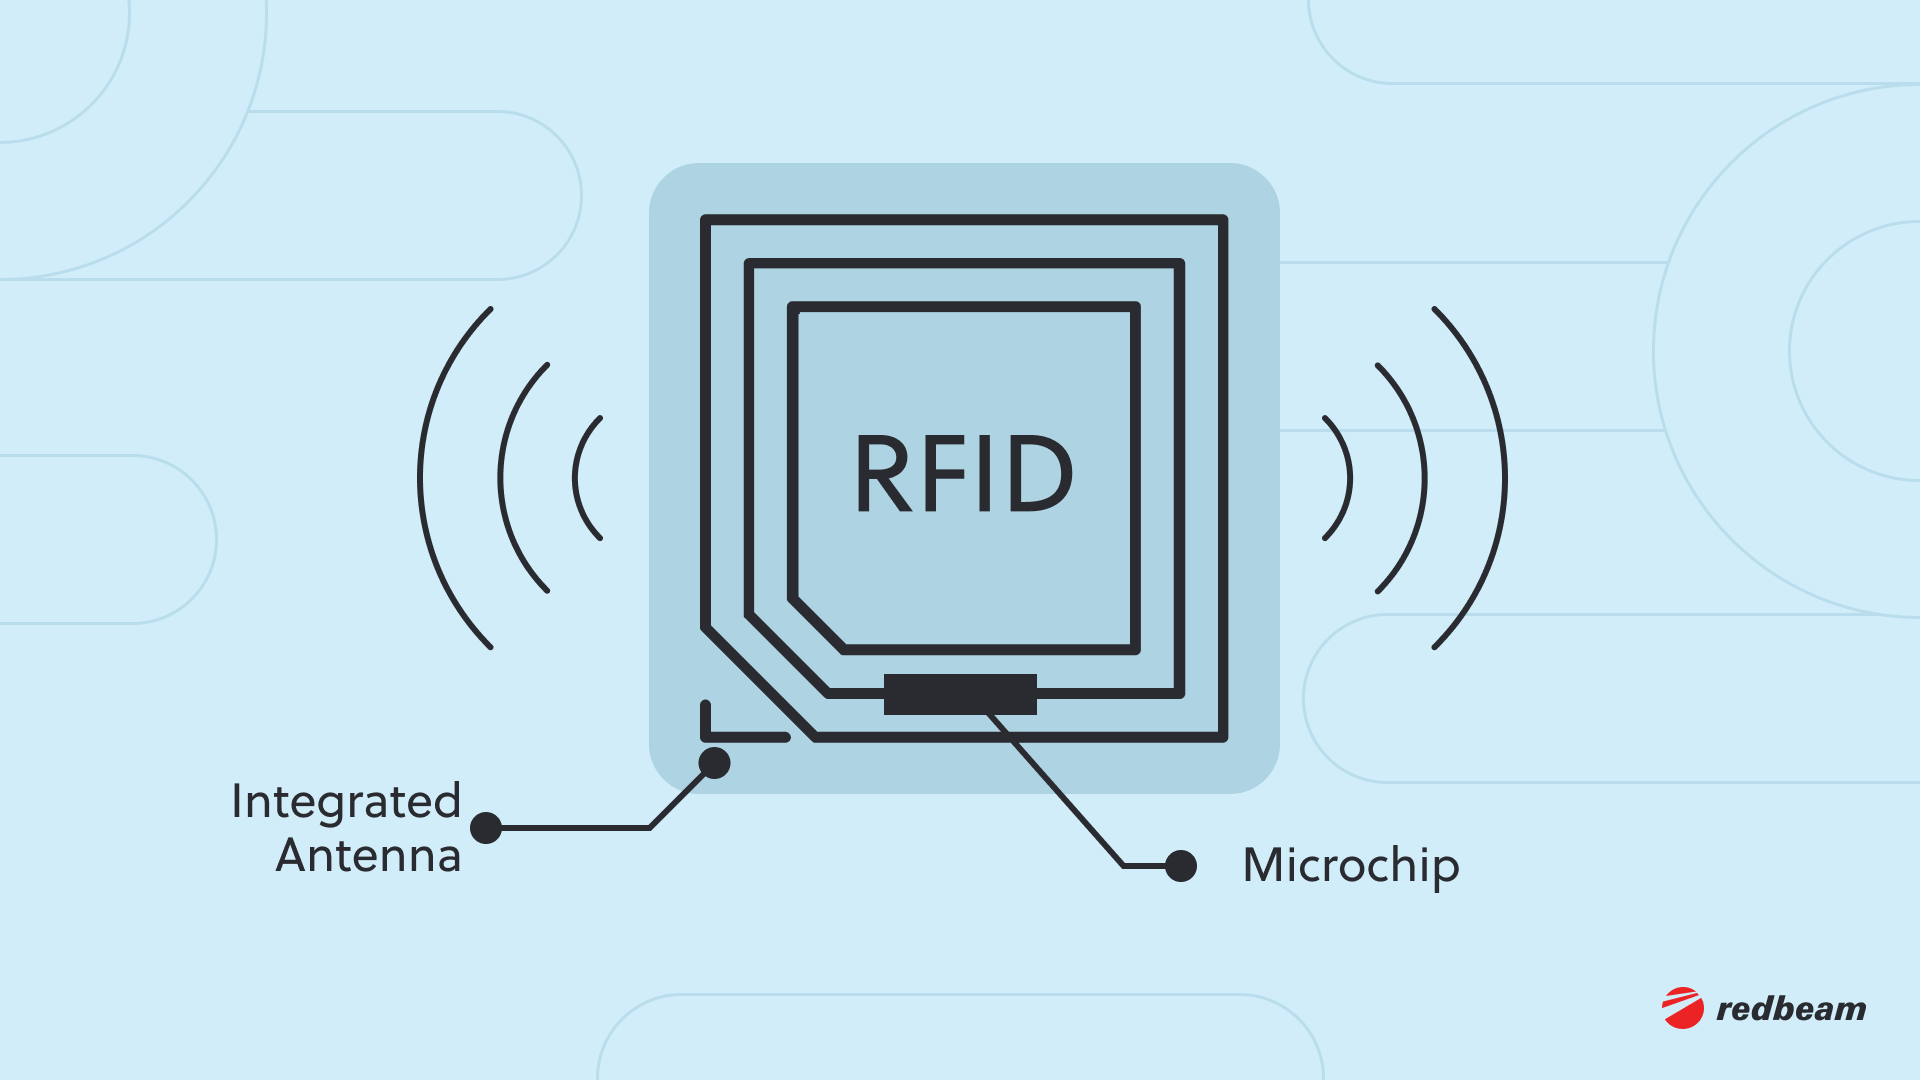 2.RFID Asset Tag Diagram